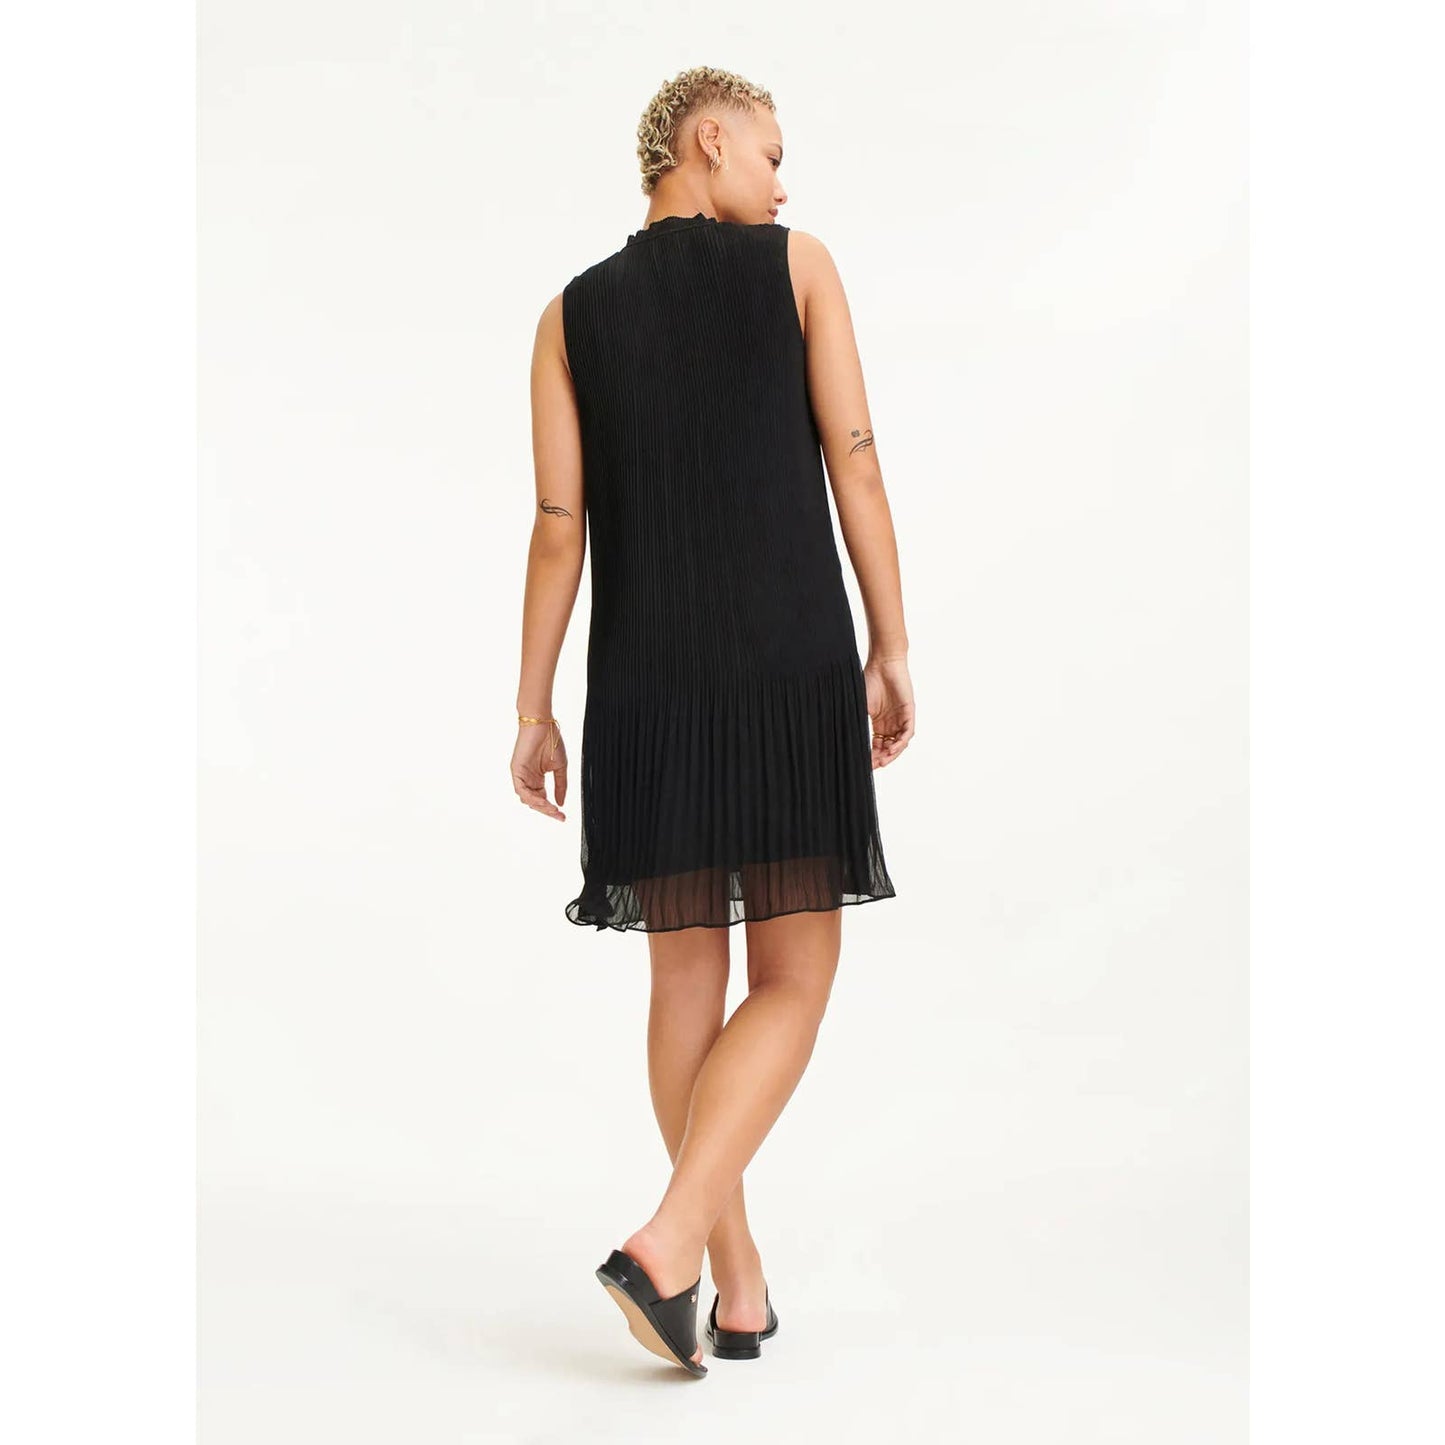 DKNY Women's Black Sleeveless Tie-Neck Pleated Mini Dress SZ 10